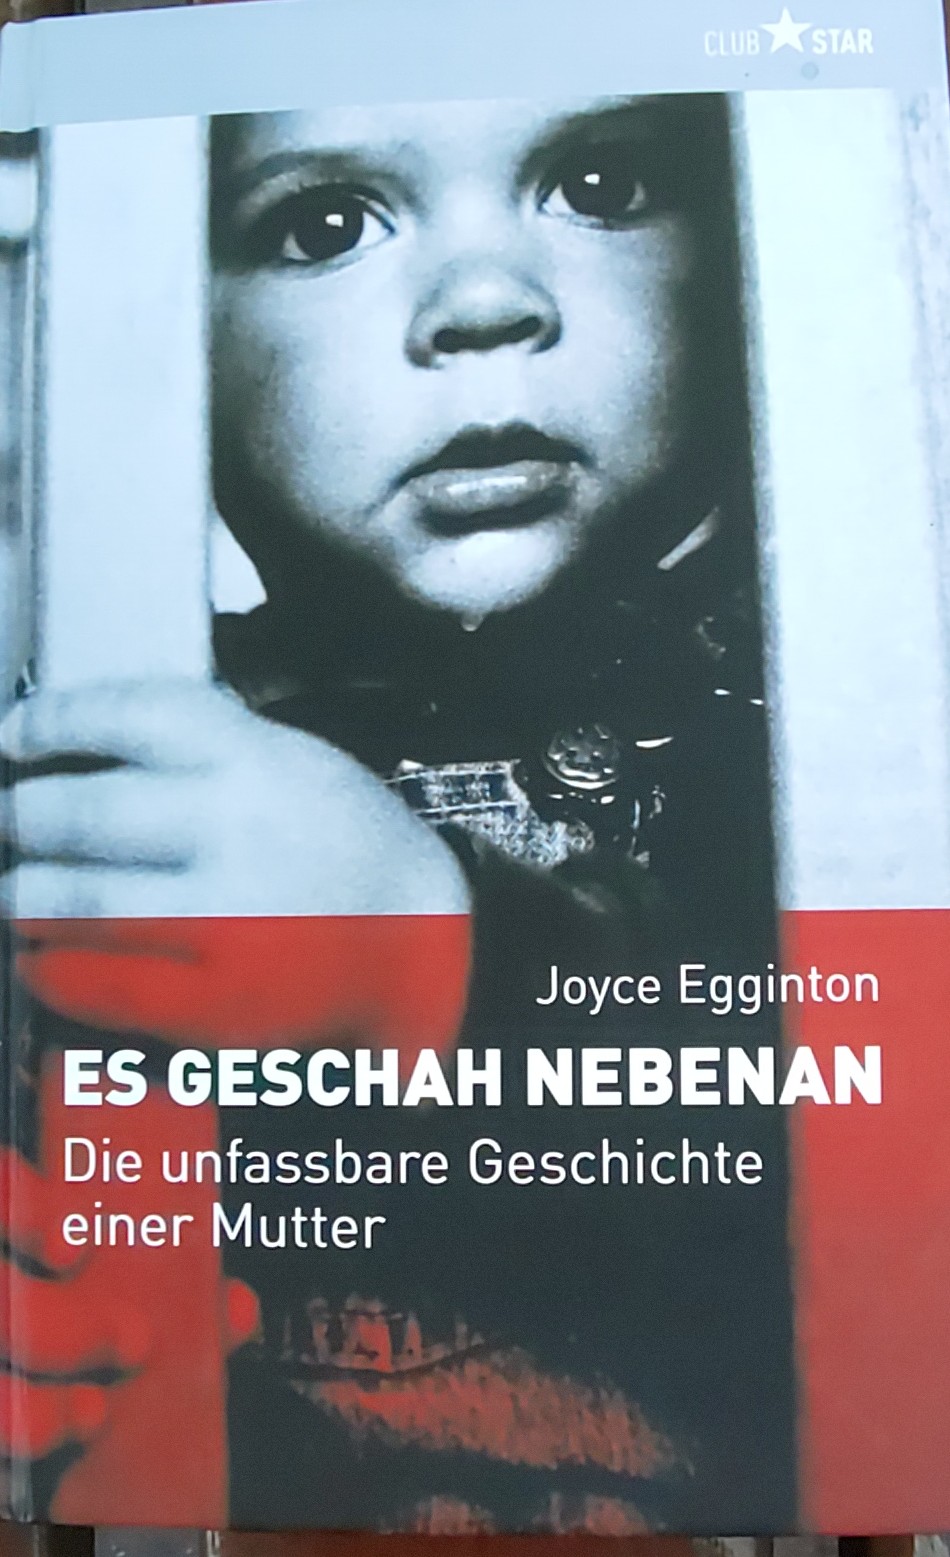 Joyce Egginton: Es geschah nebenan (Hardcover, Deutsch language, 1991)